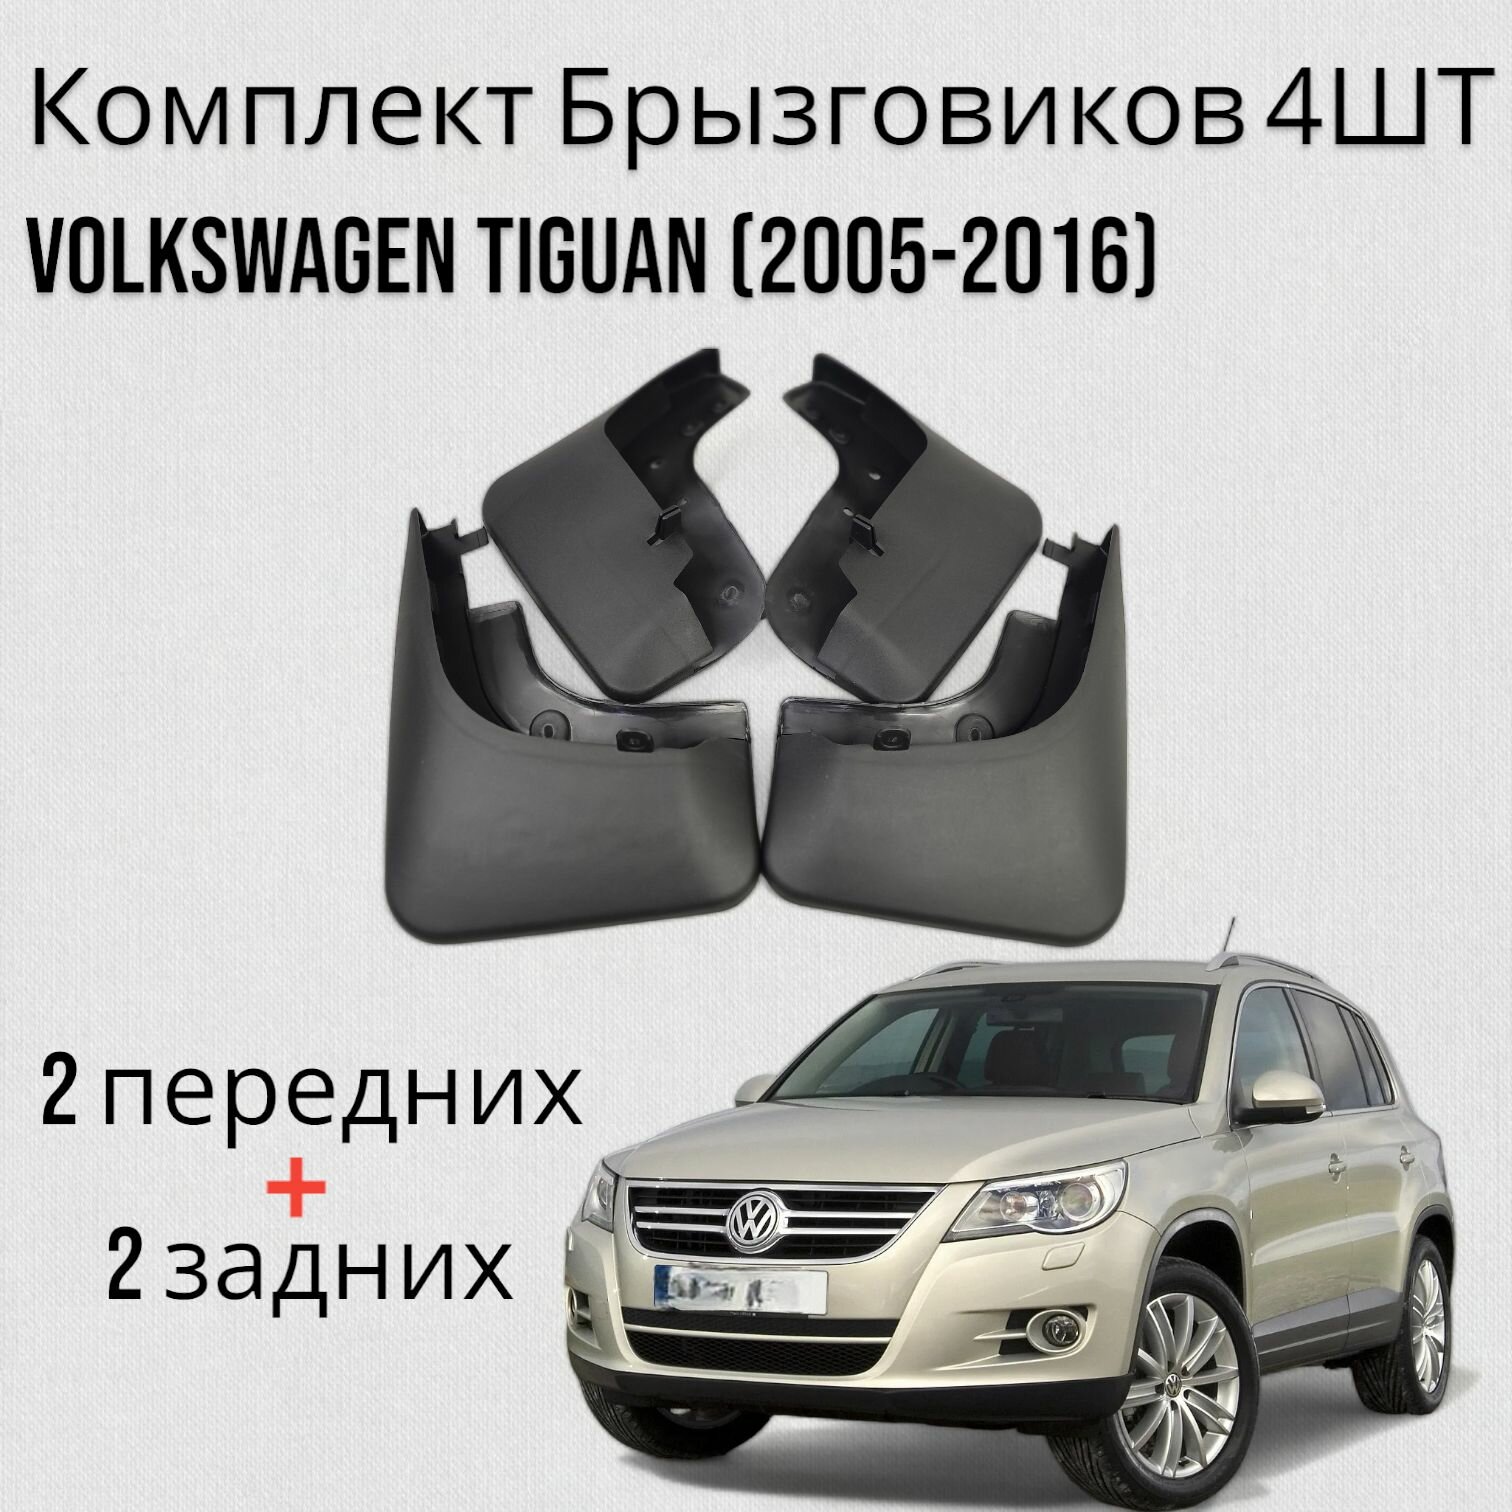 Комплект Брызговиков 4ШТ фольксваген Тигуан Volkswagen Tiguan (2005-2016) 2 передних + 2 задних